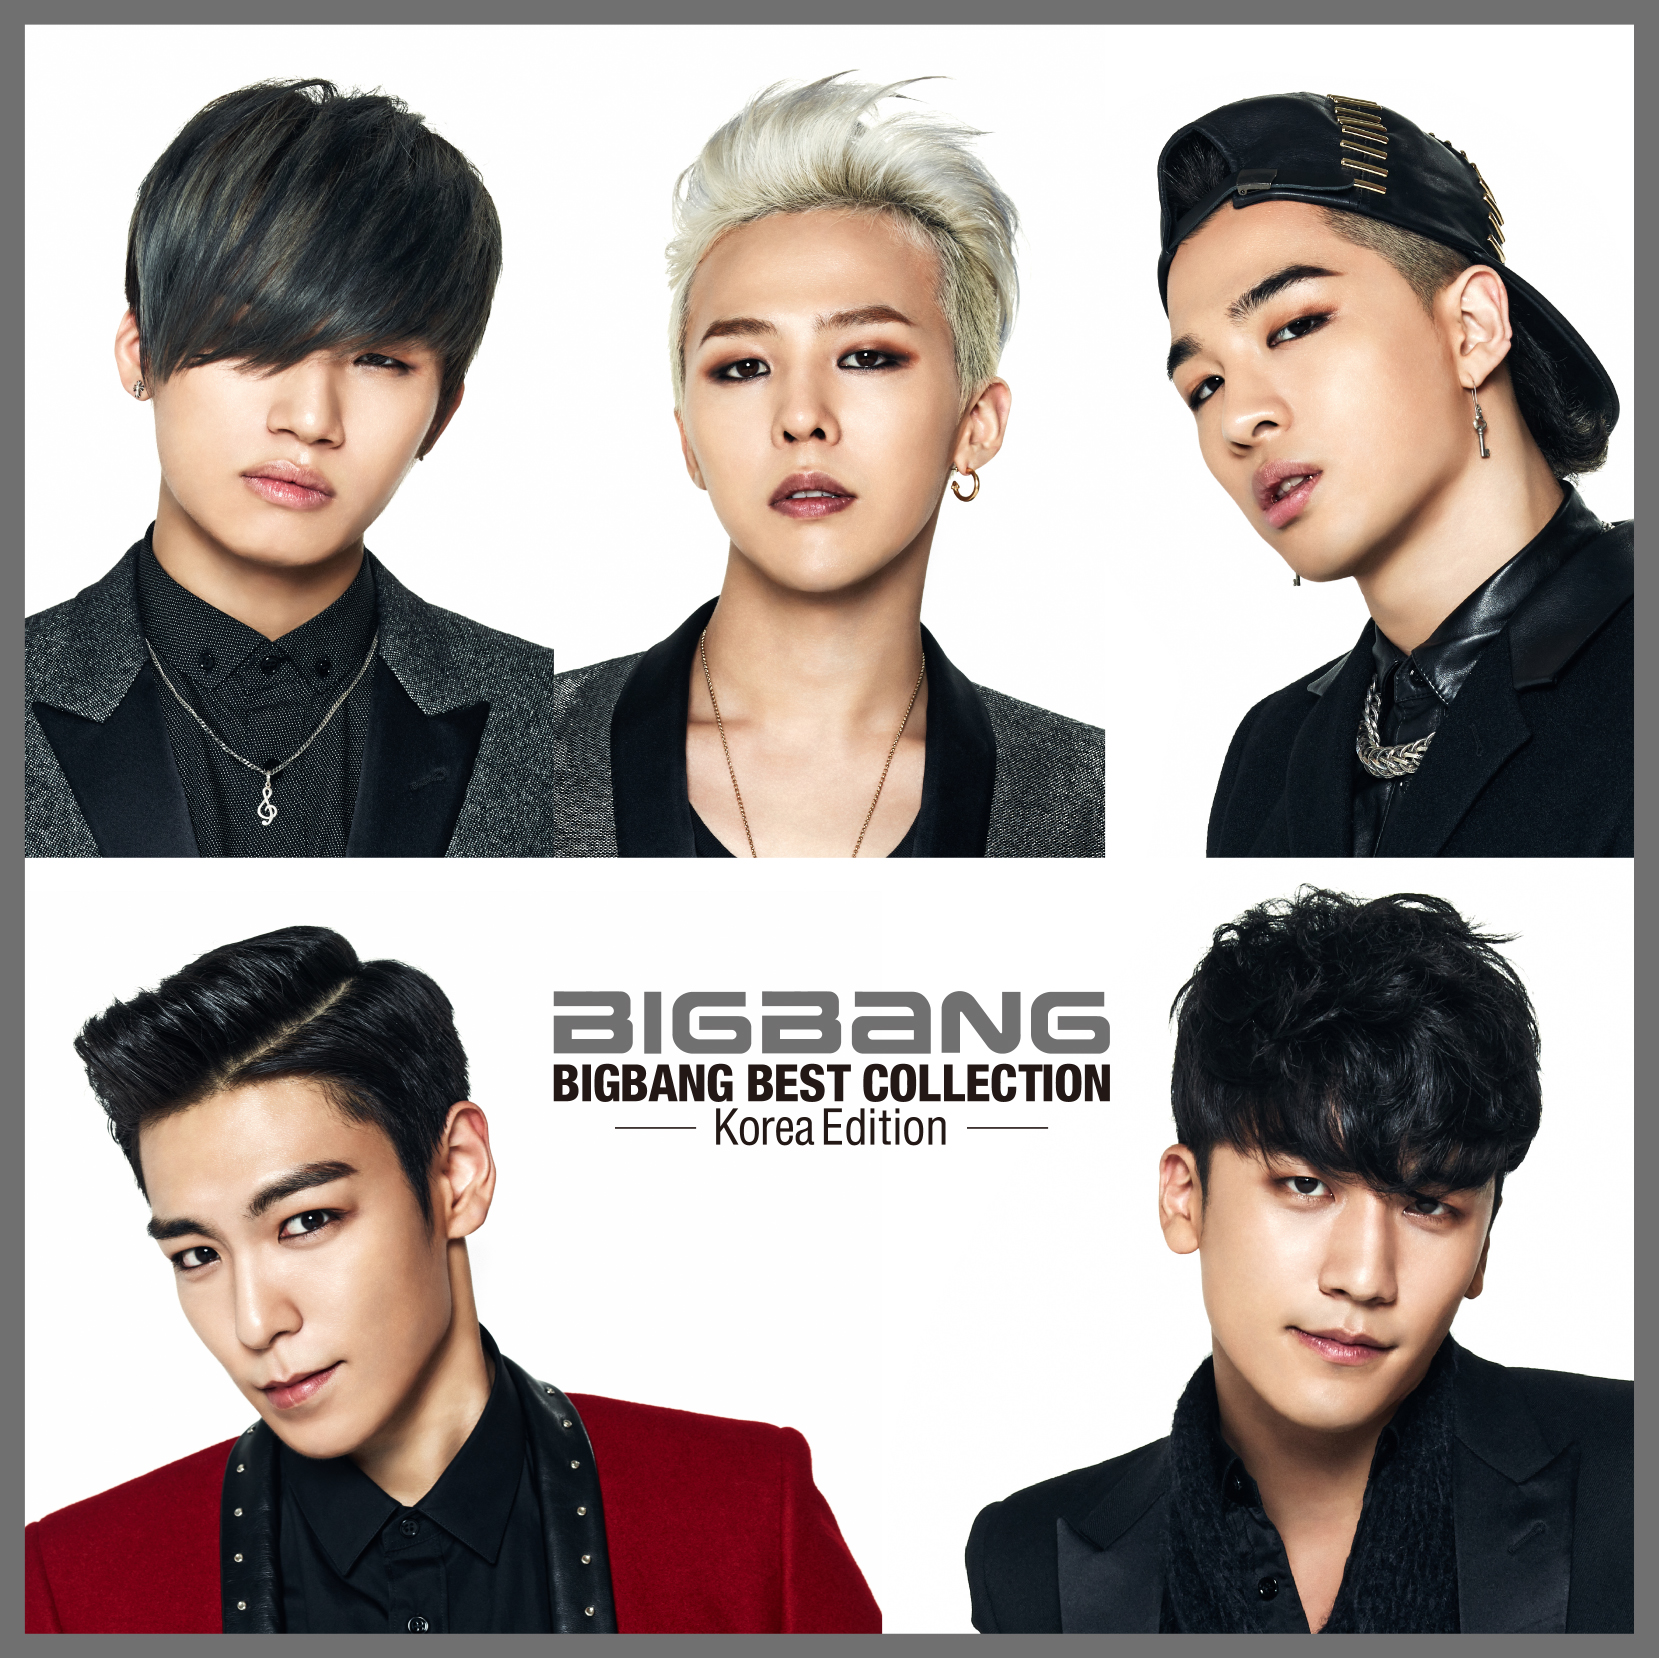 BIGBANG - 2NE1 AND BIGBANG Wallpaper (21418015) - Fanpop